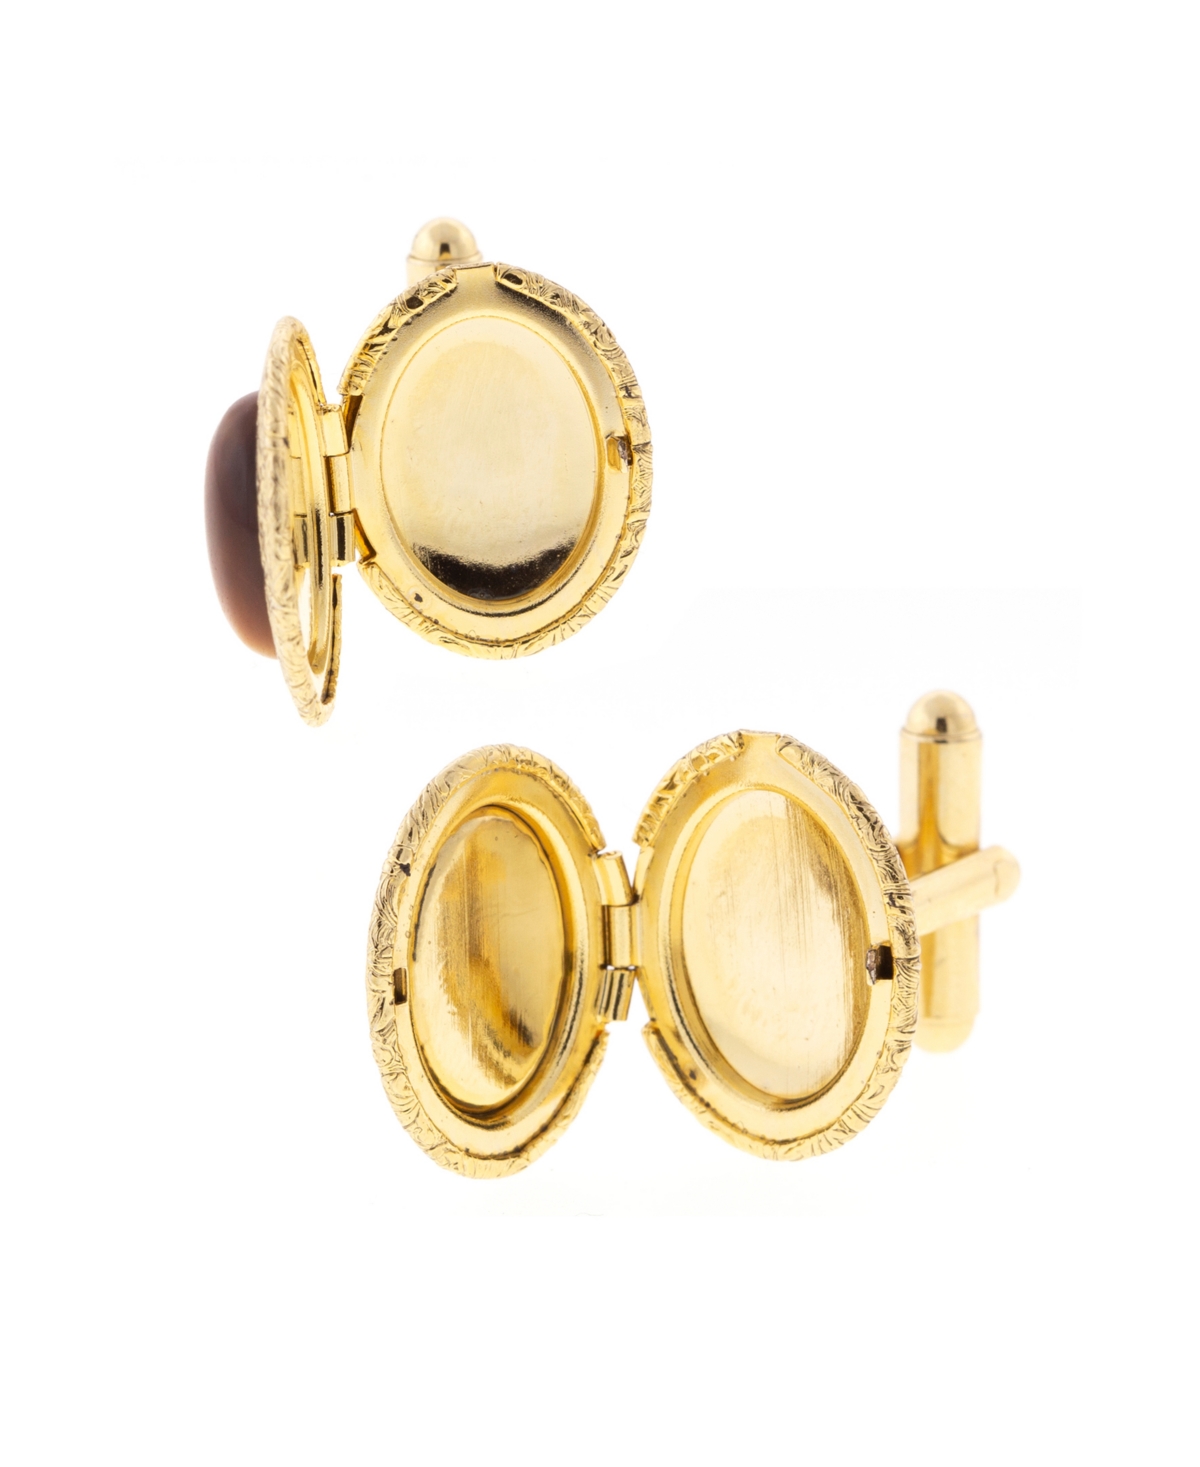 1928 Jewelry 14k Gold Plated Tiger's Eye Oval Locket Cufflinks In Brown